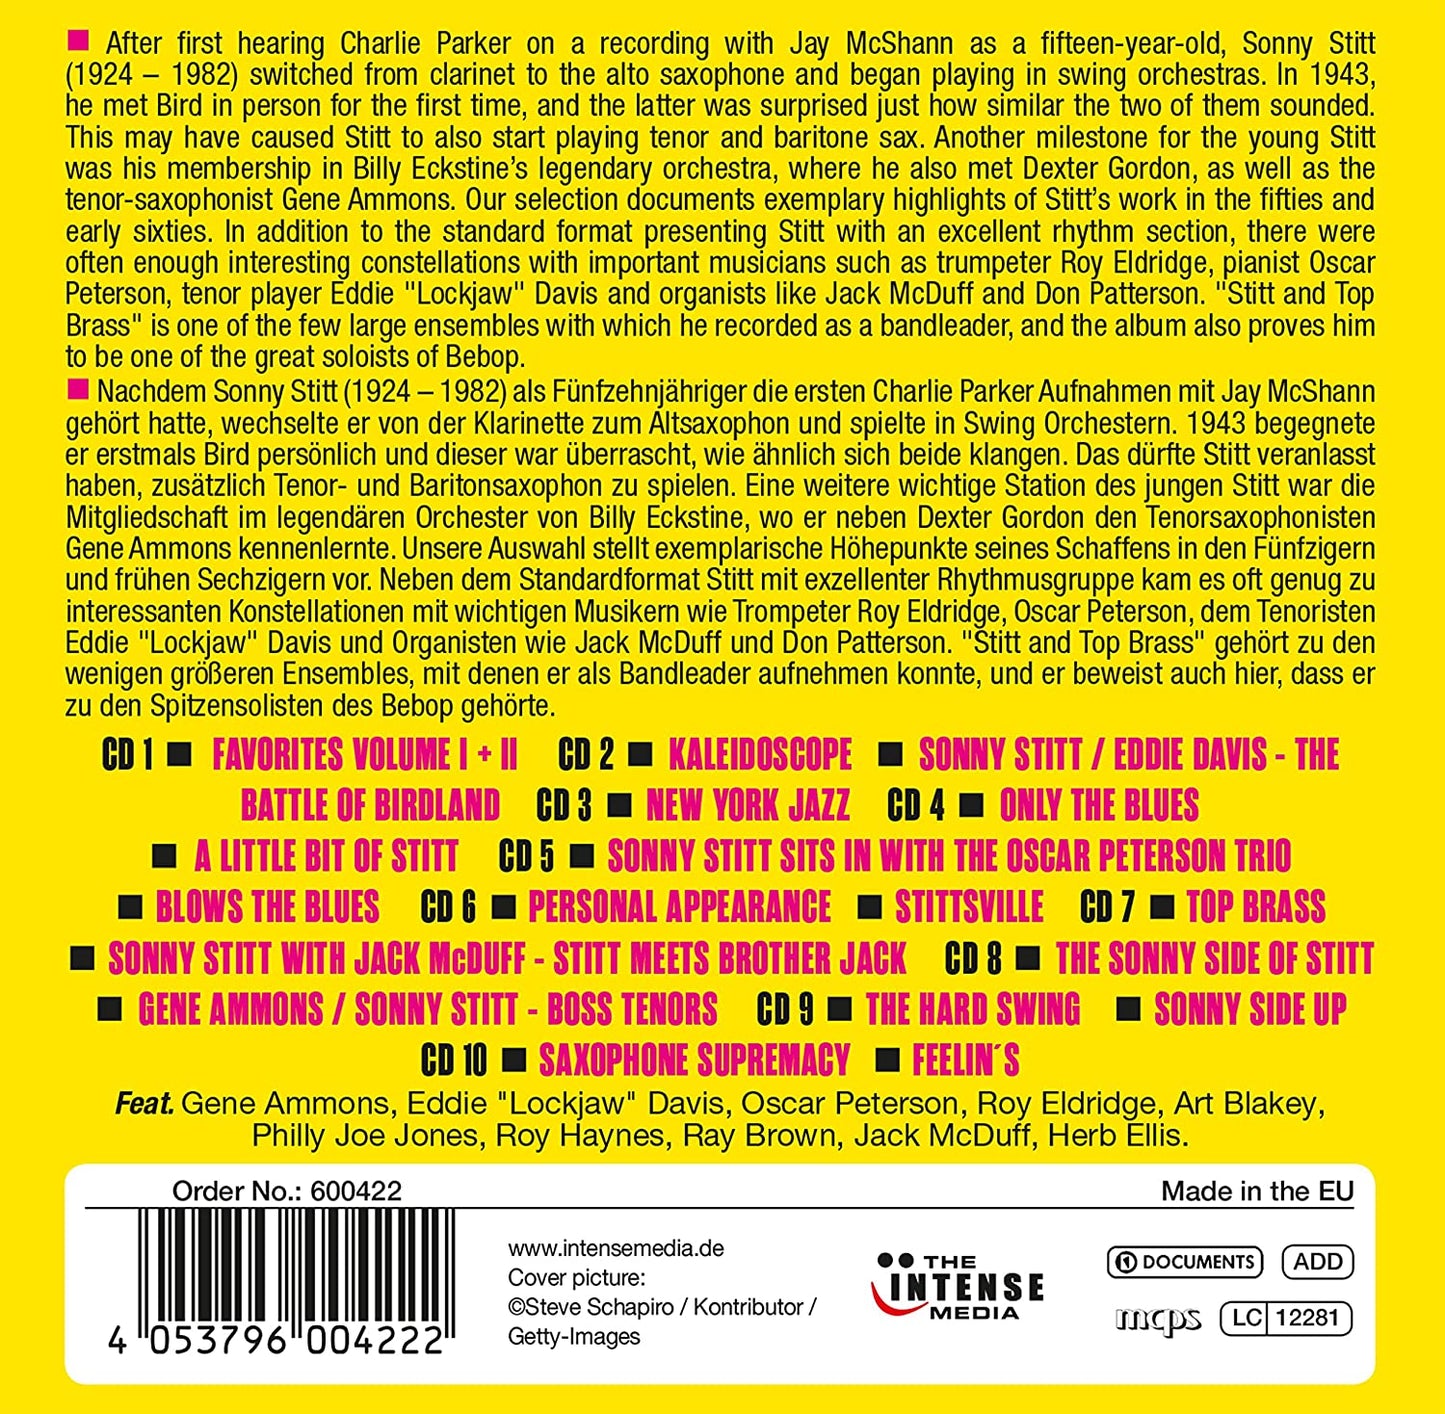 SONNY STITT: MILESTONES OF A JAZZ LEGEND (10 CDS)